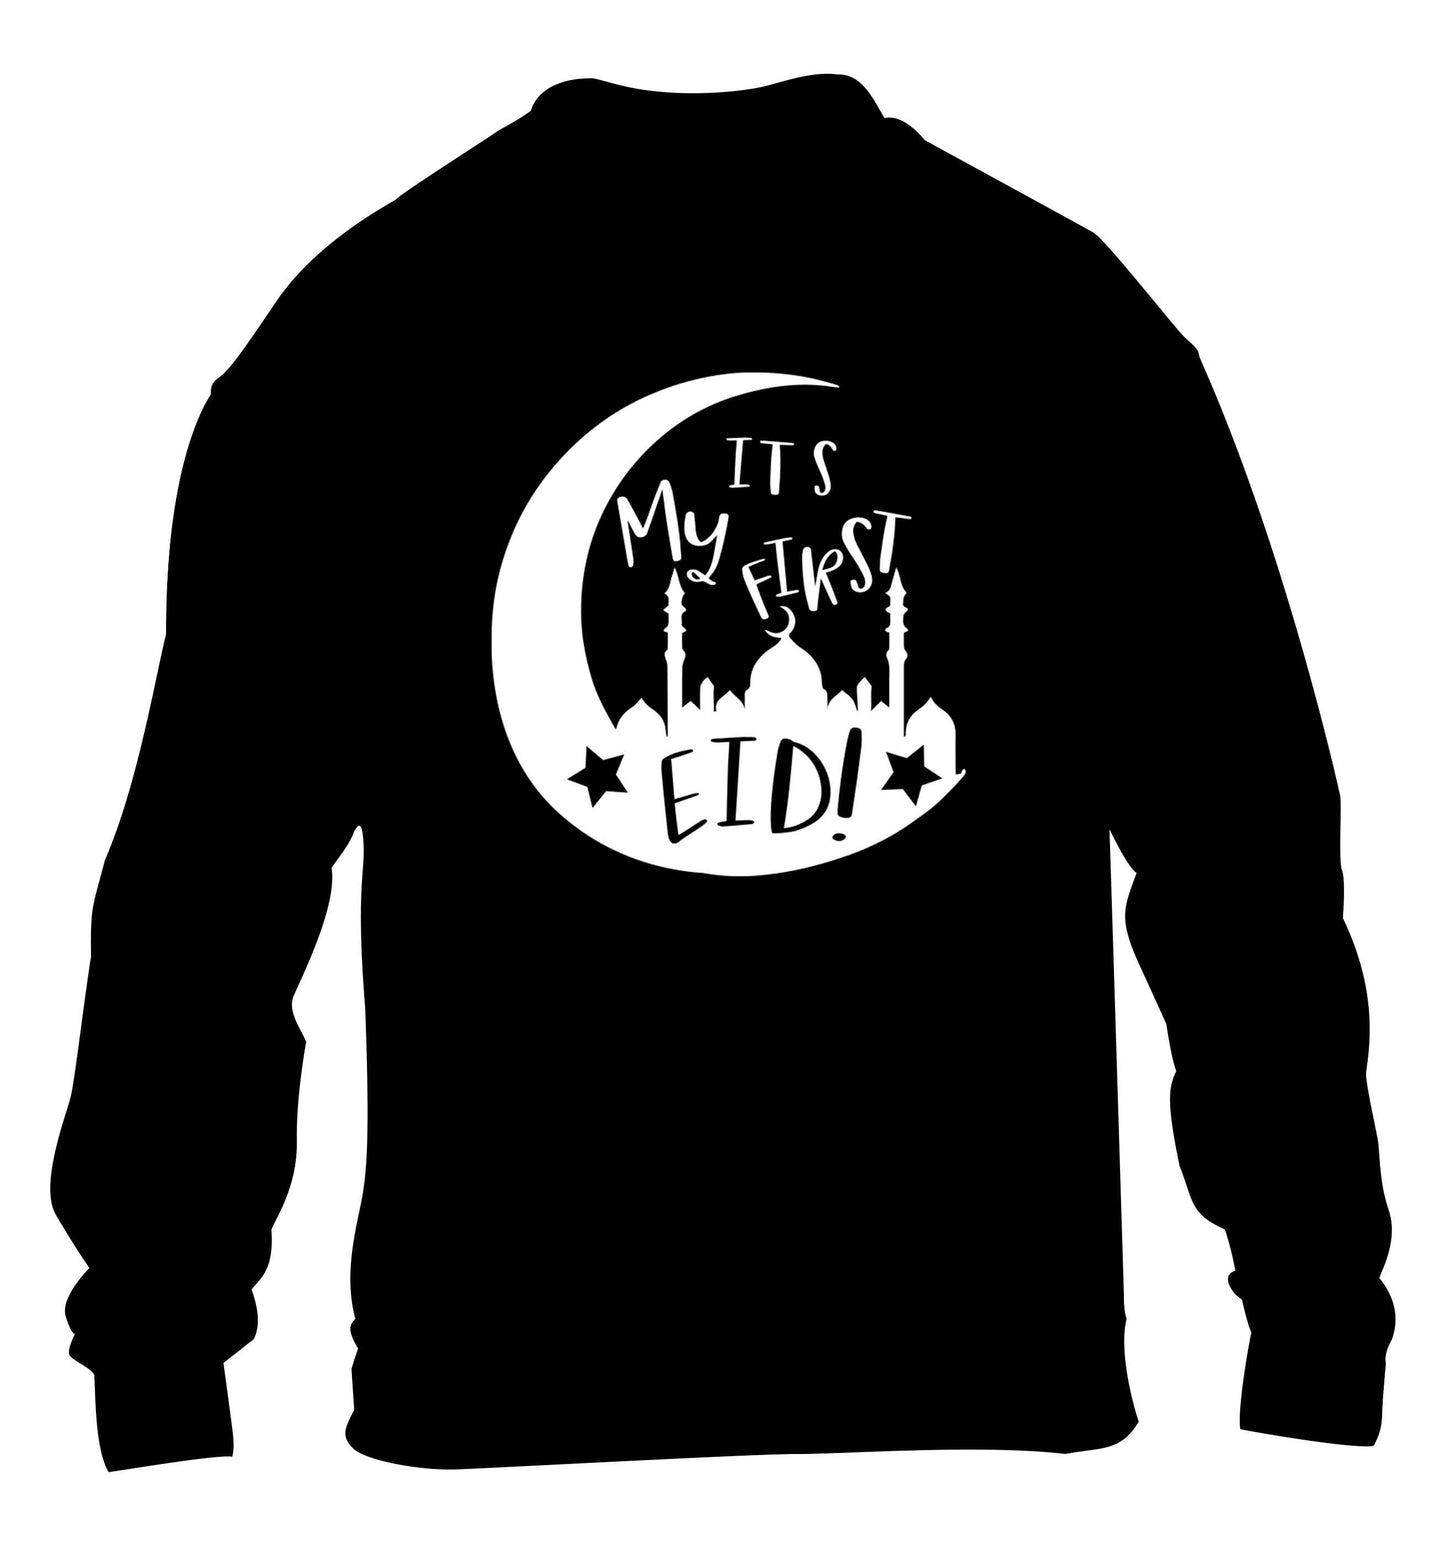 It's my first Eid moon children's black sweater 12-13 Years